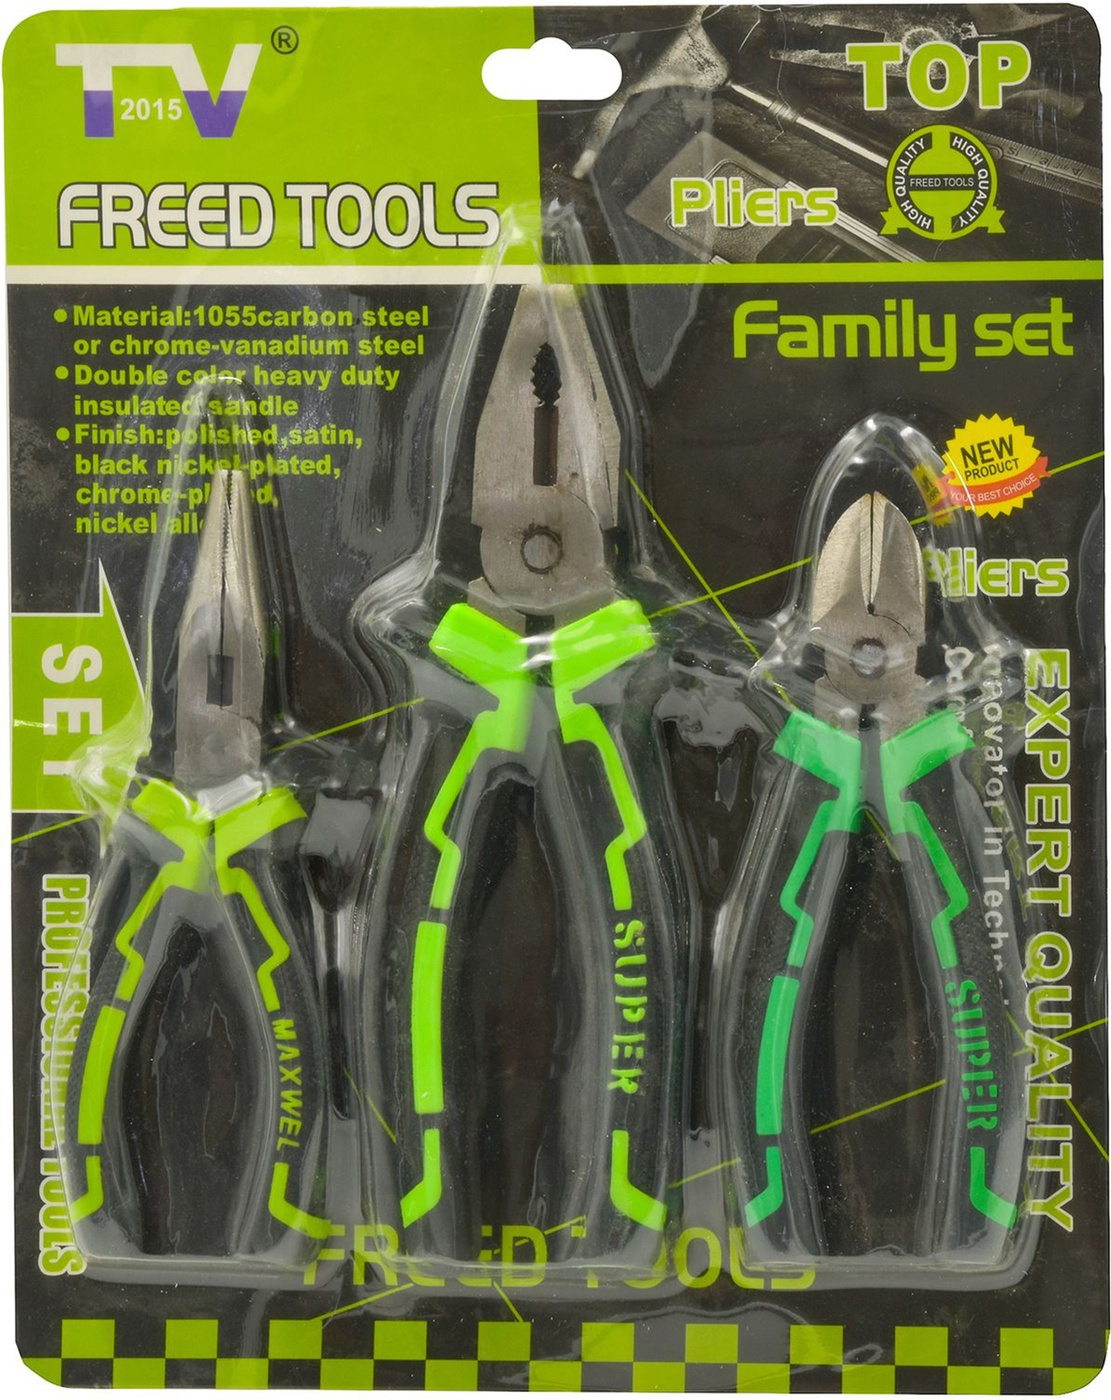 Family tools. Набор инструмента Family SETTOOLS. Family Set Tool набор инструментов. Набор инструмента 4 предмета Family SETTOOLS. Family Set Tool набор инструментов описание.